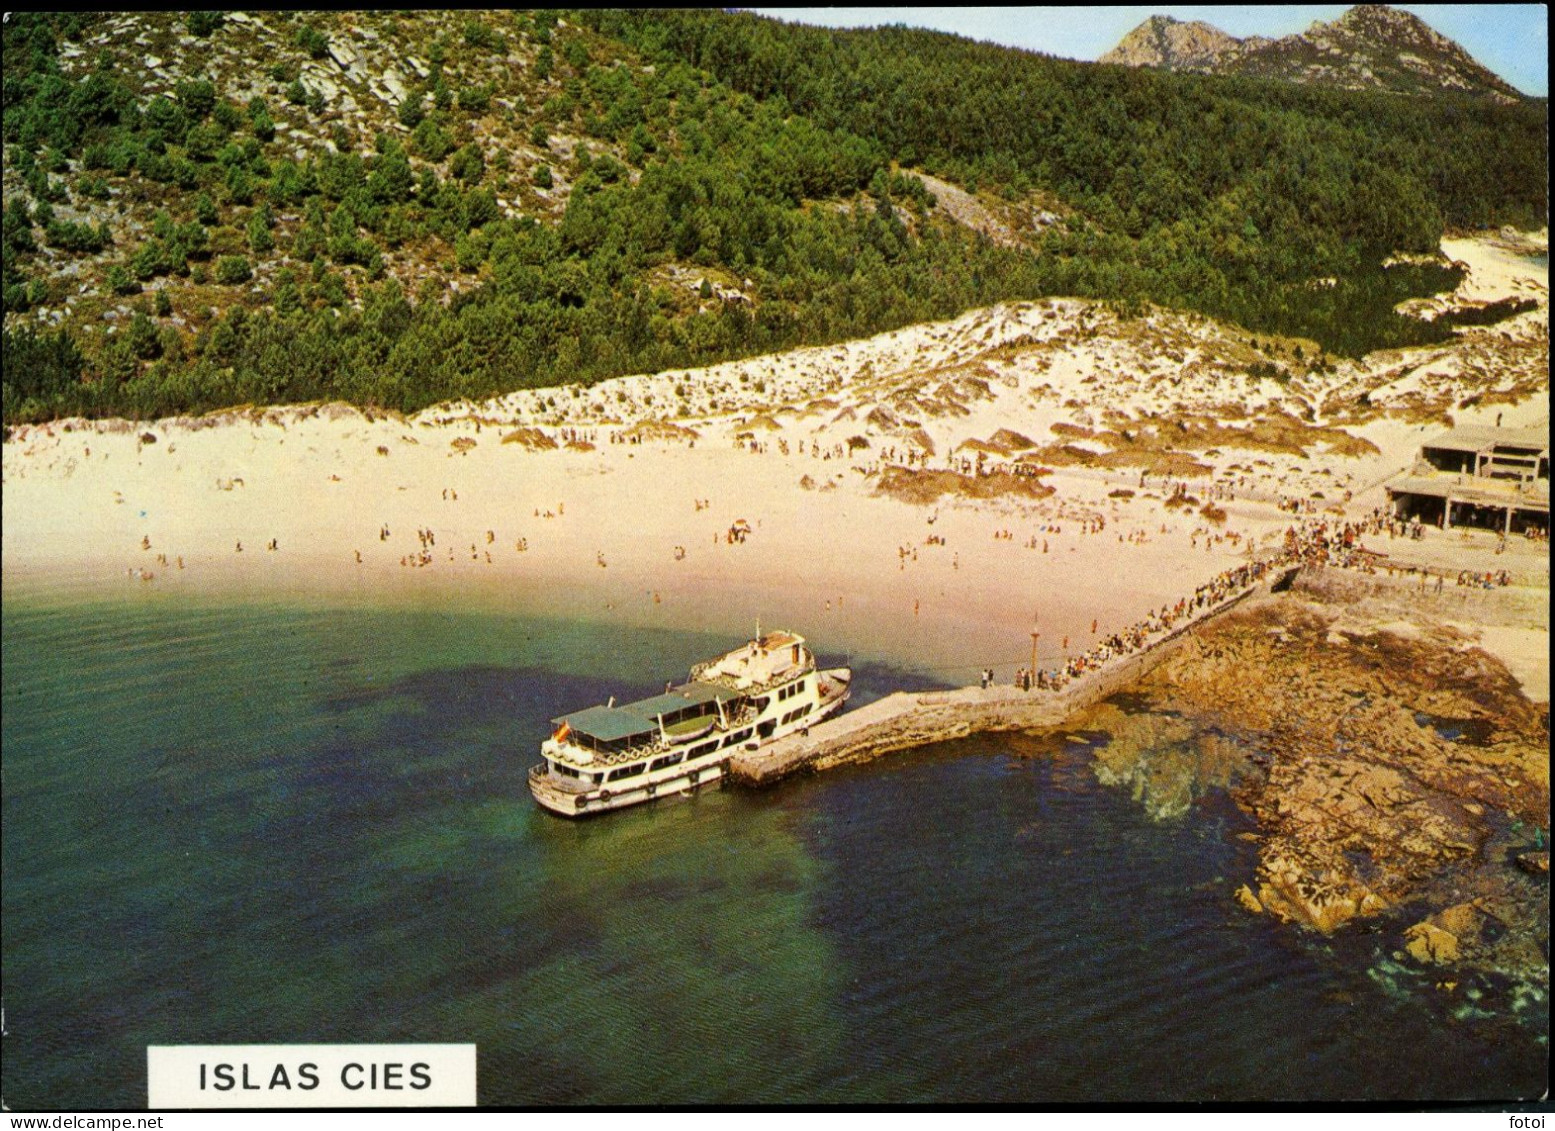 BOAT BARCO ISLAS CIES VIGO GALICIA CARTE POSTALE OLD POSTCARD TARJETA POSTAL ESPAÑA SPAIN - Pontevedra